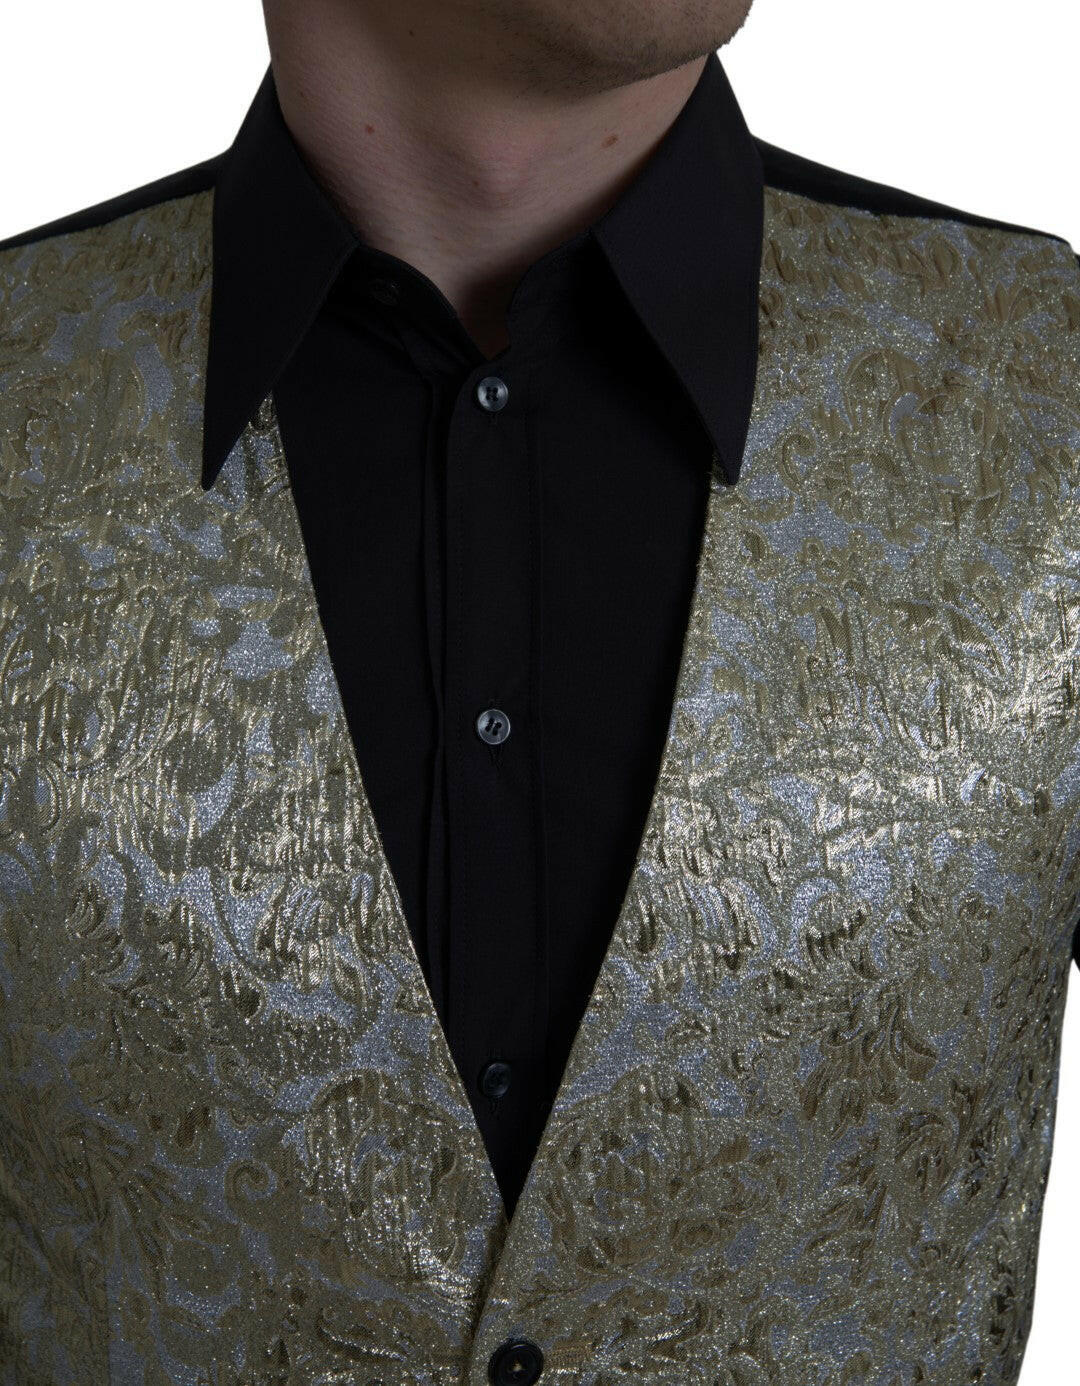 Dolce & Gabbana Floral Jacquard Waistcoat Formal Gold Vest - GENUINE AUTHENTIC BRAND LLC  